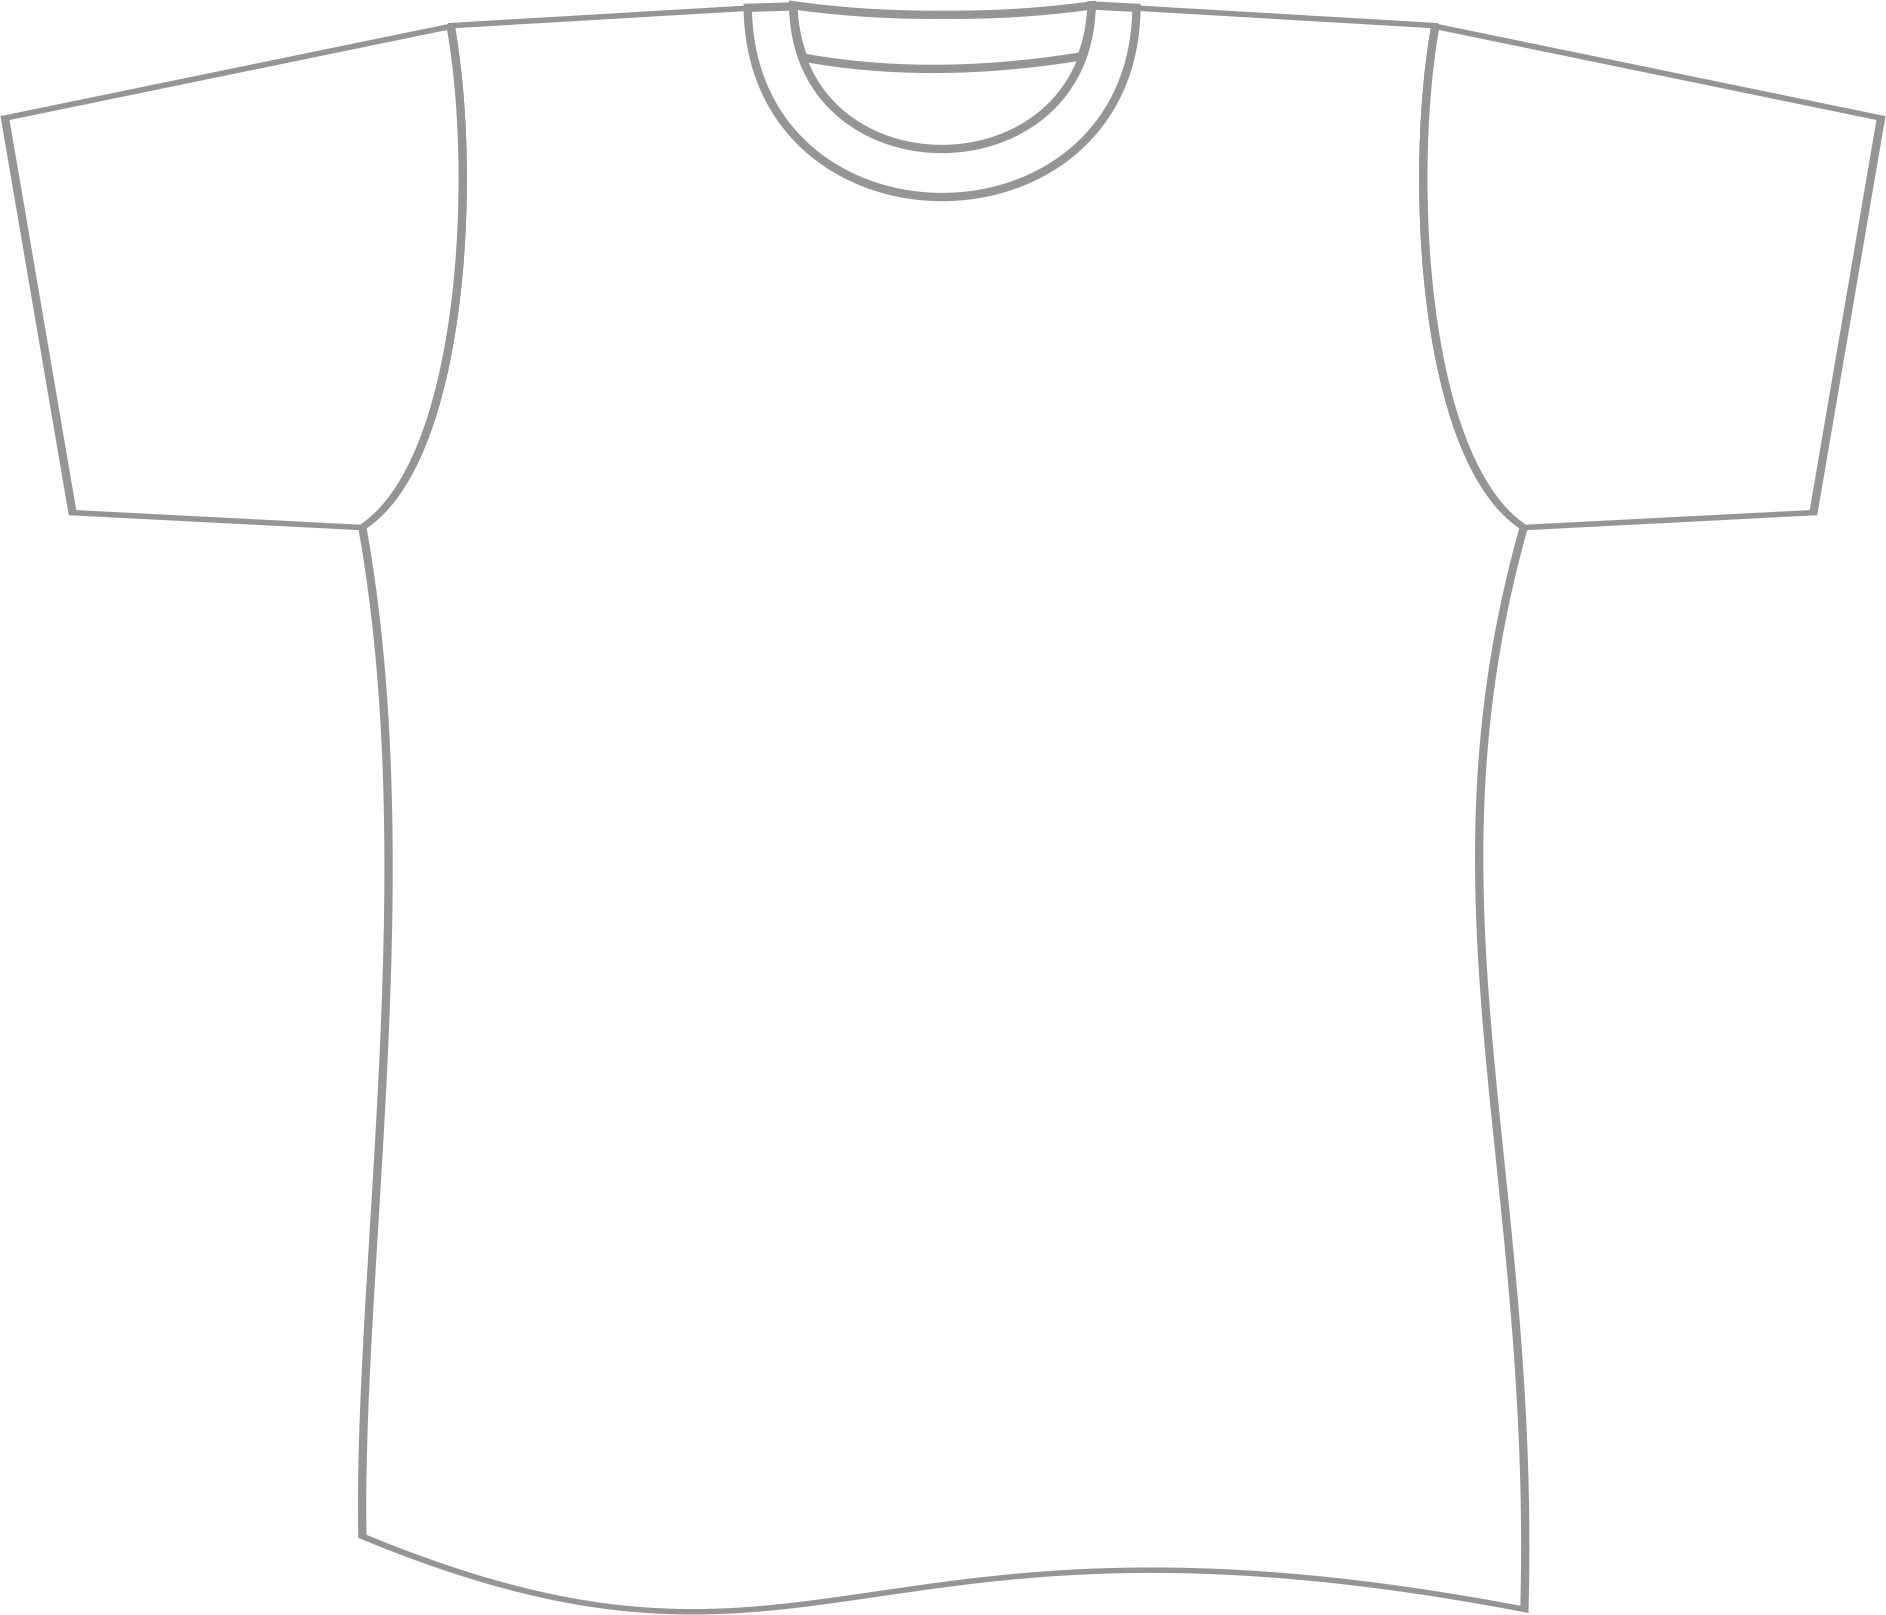 Blank Tshirt Template Pdf - Creative Sample Templates inside Blank Tshirt Template Pdf